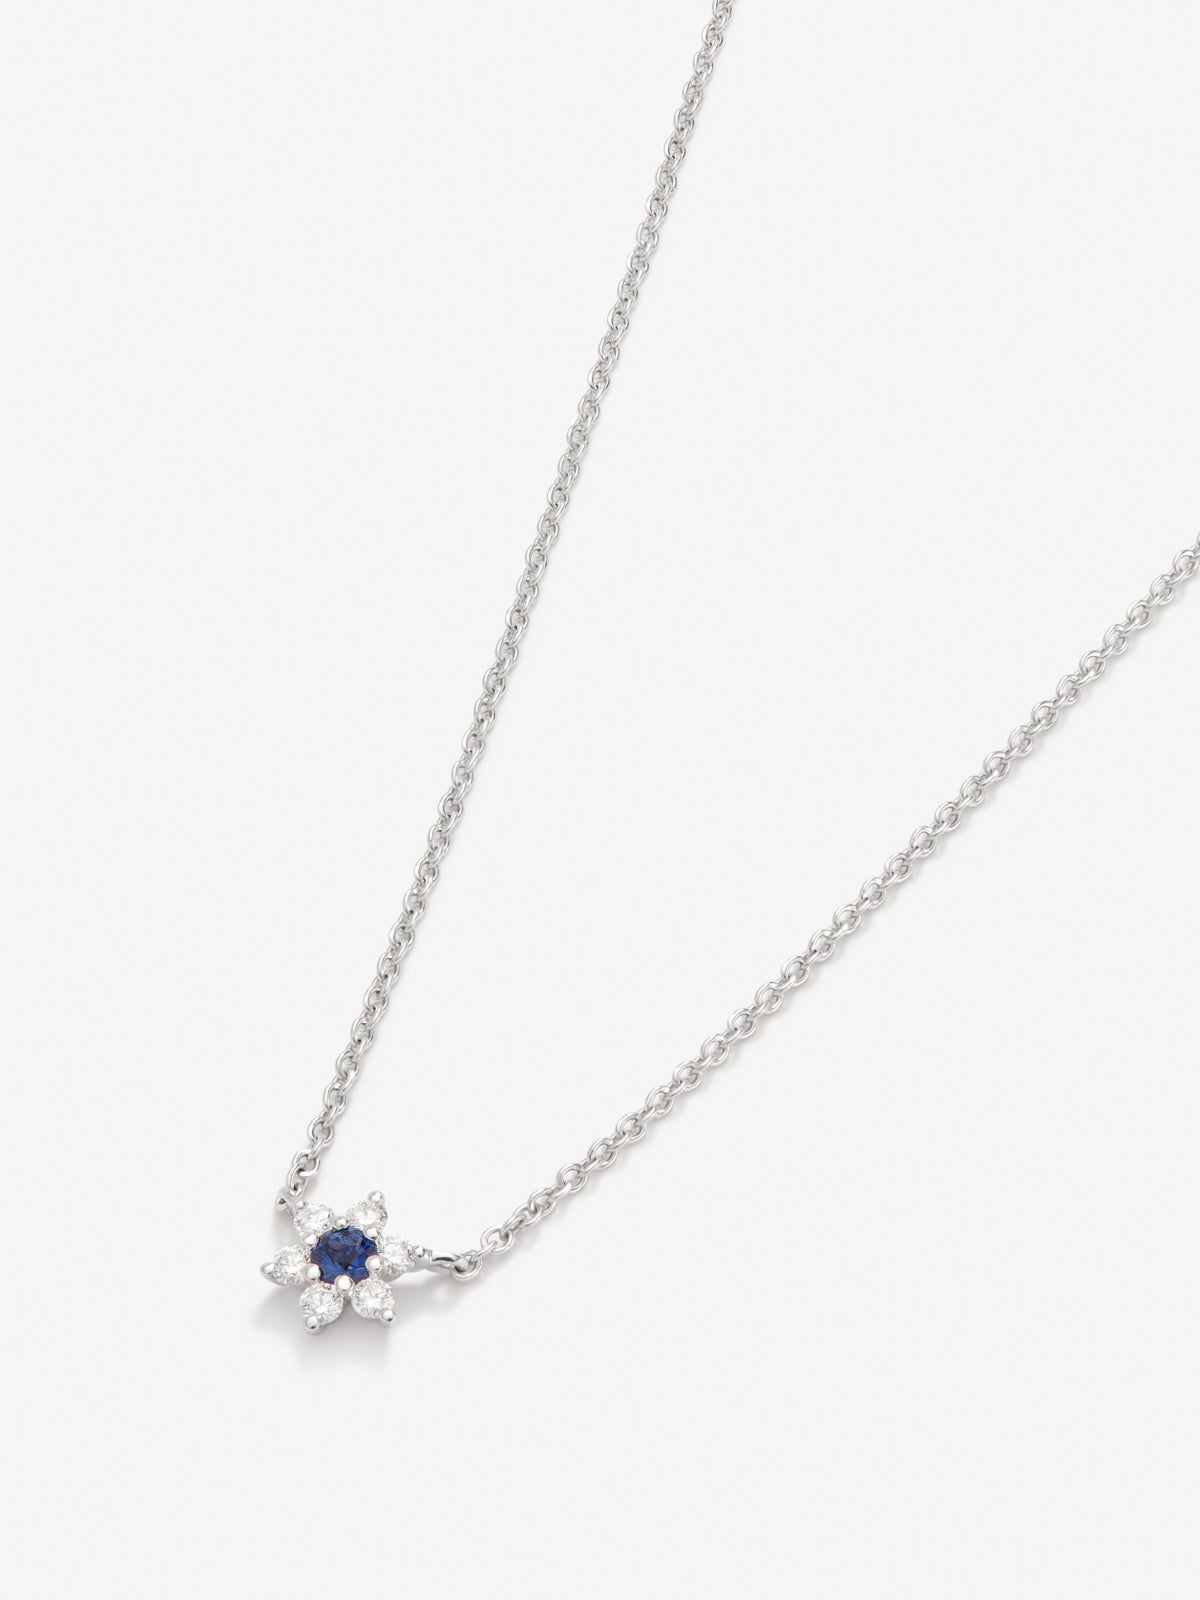 18K white gold pendant with 0.1 ct brilliant-cut blue sapphire and 0.12 ct brilliant-cut star-shaped diamonds